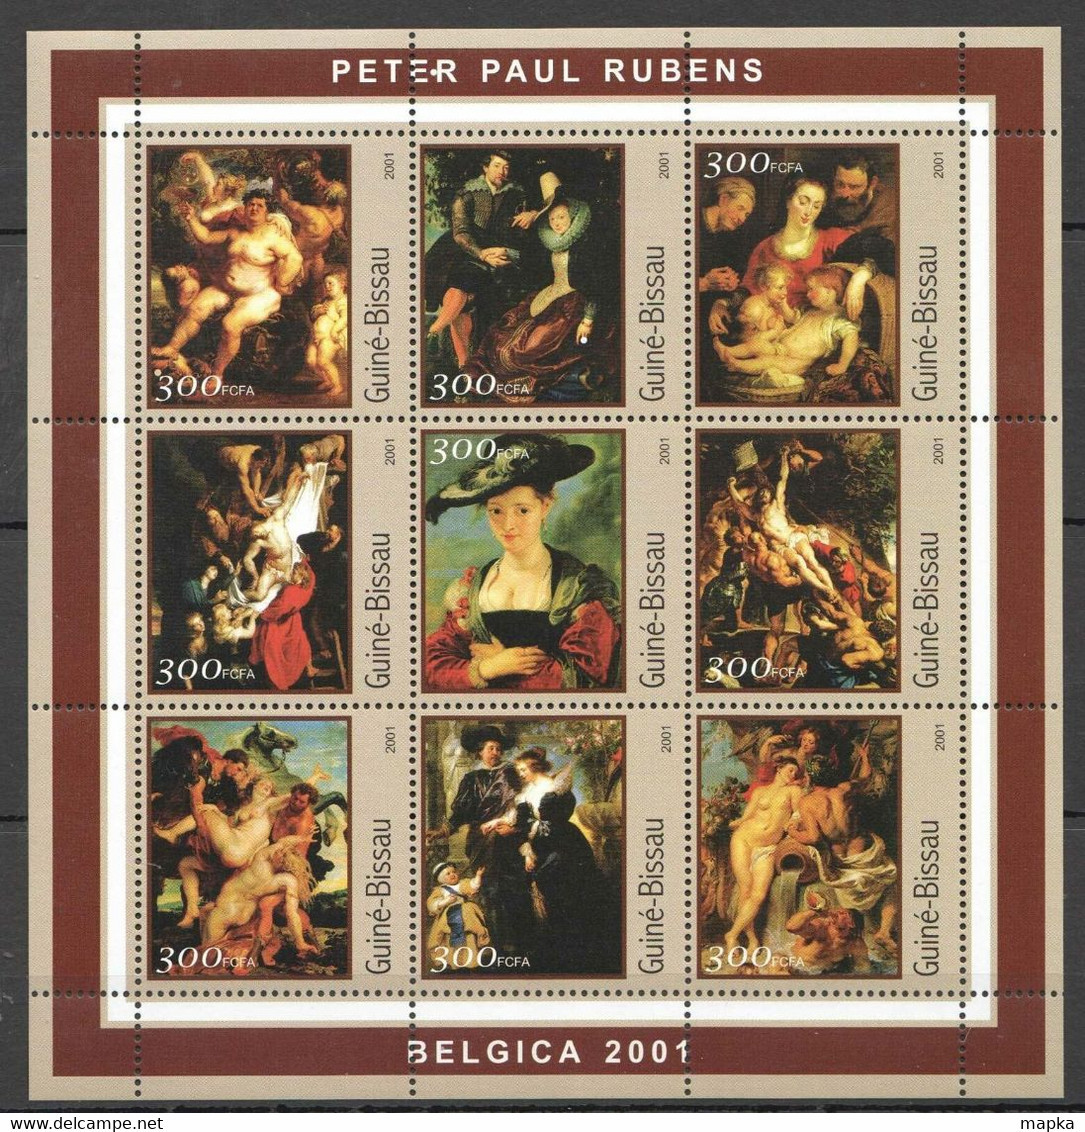 NS0468 2001 GUINEA-BISSAU ART PAINTINGS PETER PAUL RUBENS 1KB MNH - Rubens